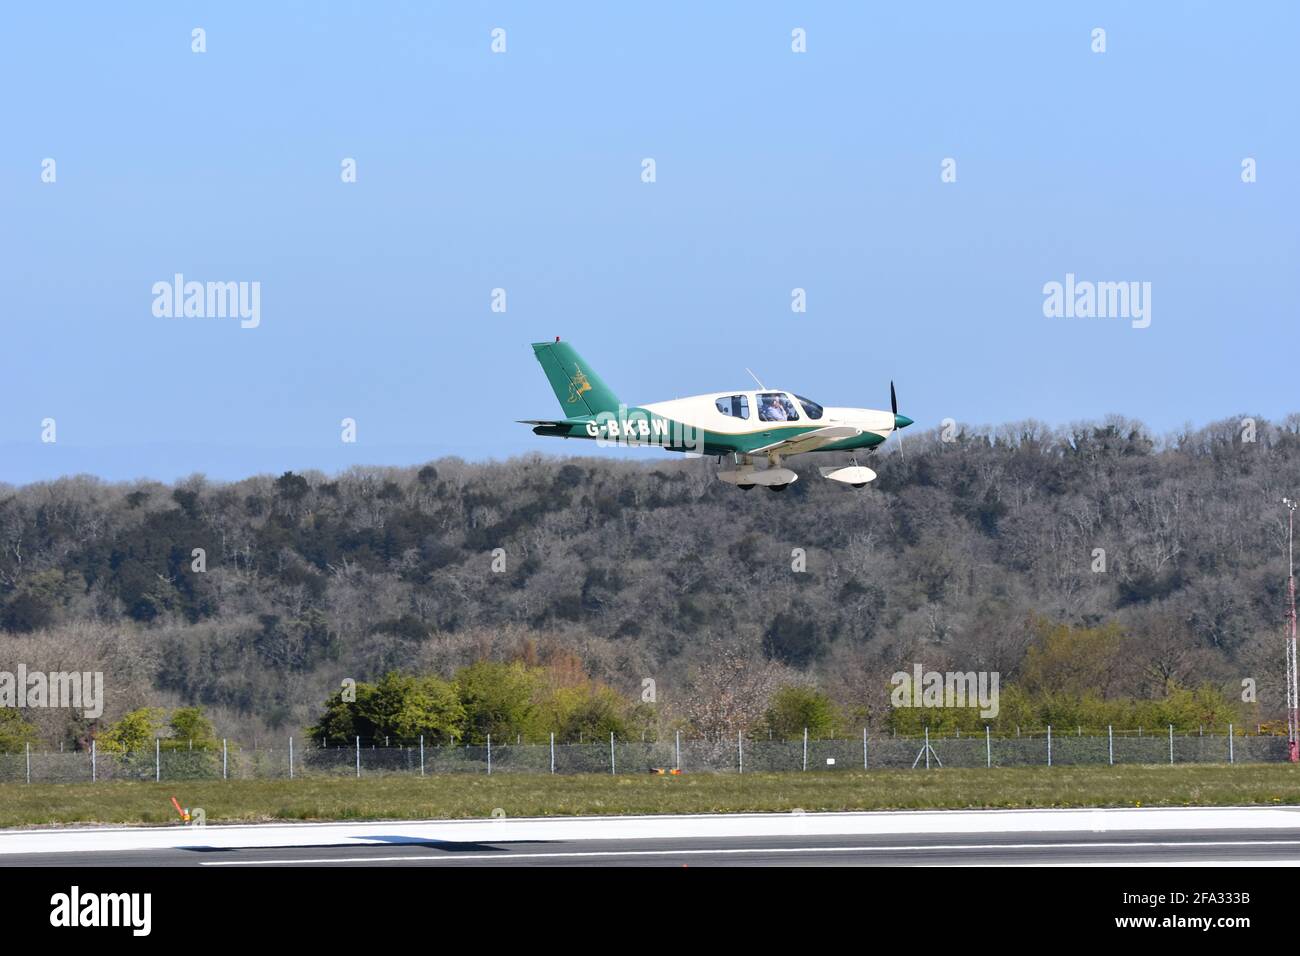 A small light aircraft coming into land at Lulsgate Airport, Bristol, England, UK Stock Photo